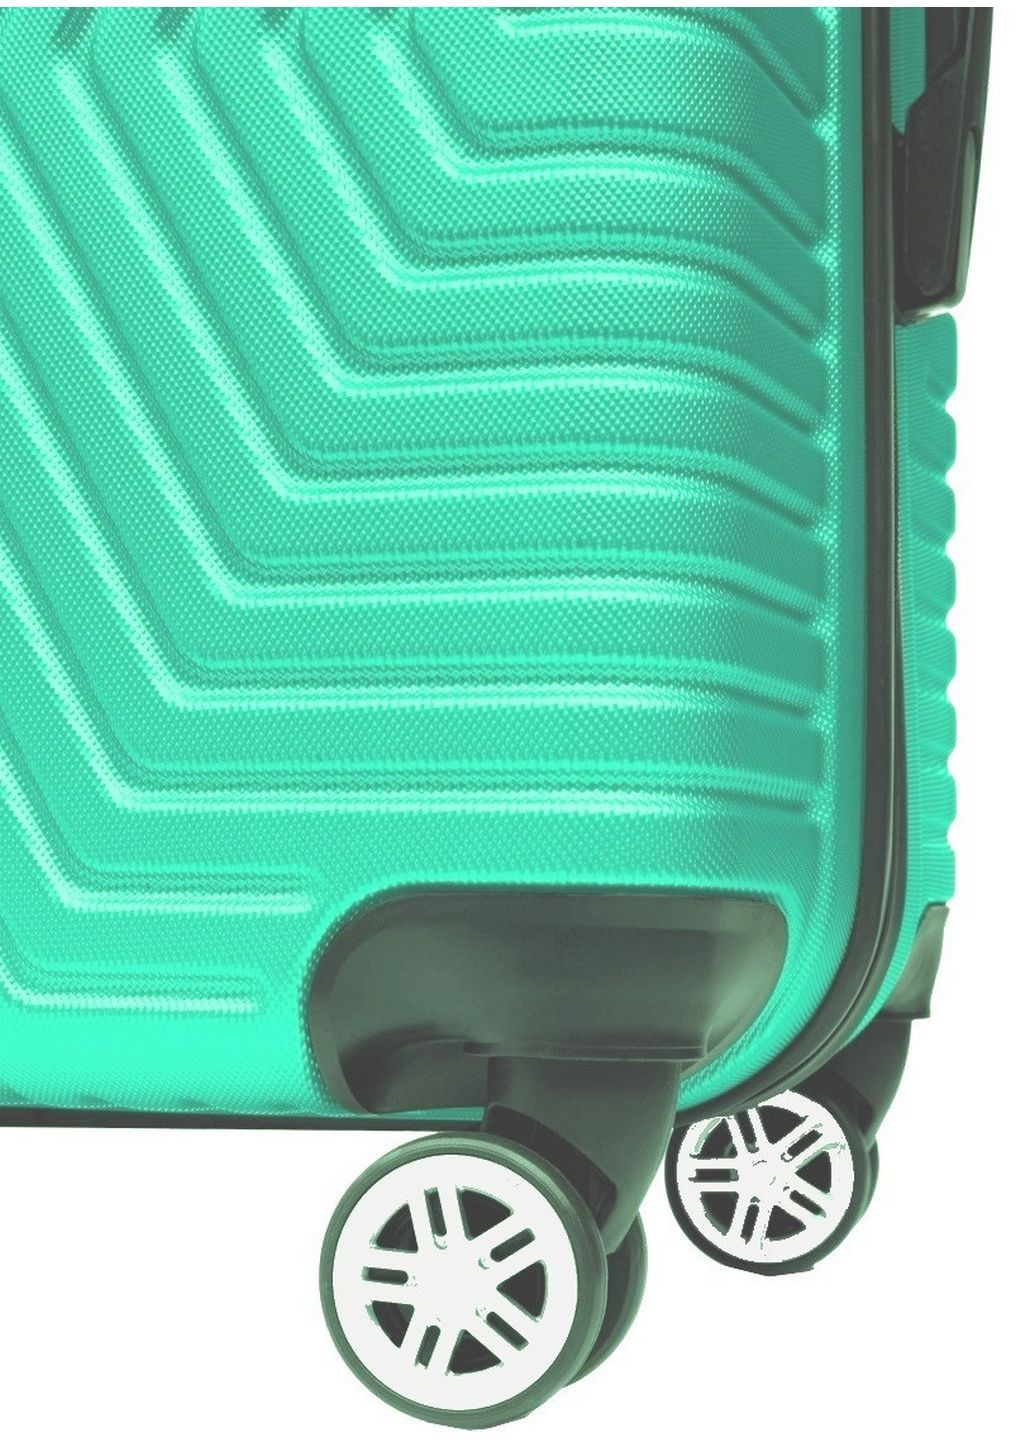 Пластиковый чемодан на колесах средний размер 70L GD Polo (288135957)